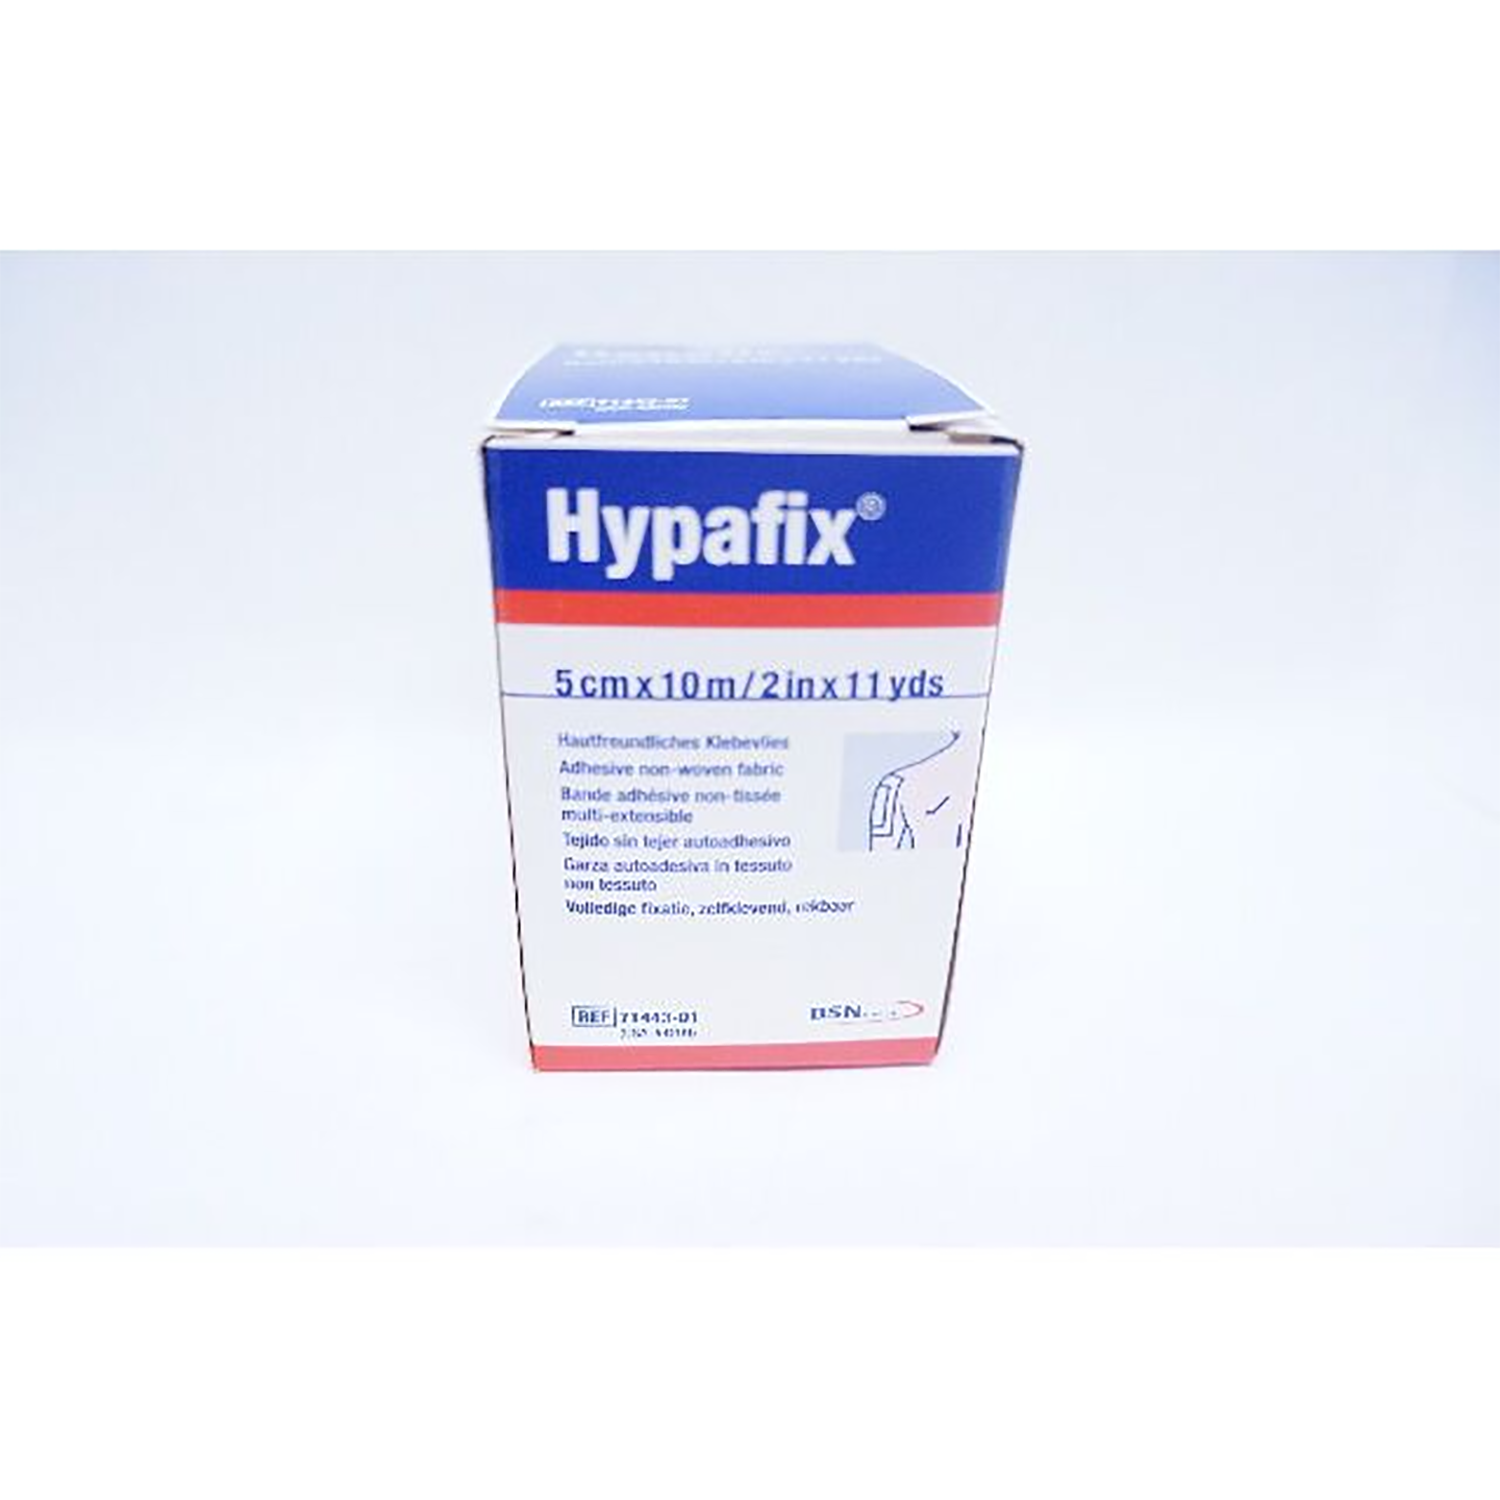 Hypafix Dressing Retention Sheet | 5cm x 10m | Pack of 24 (1)